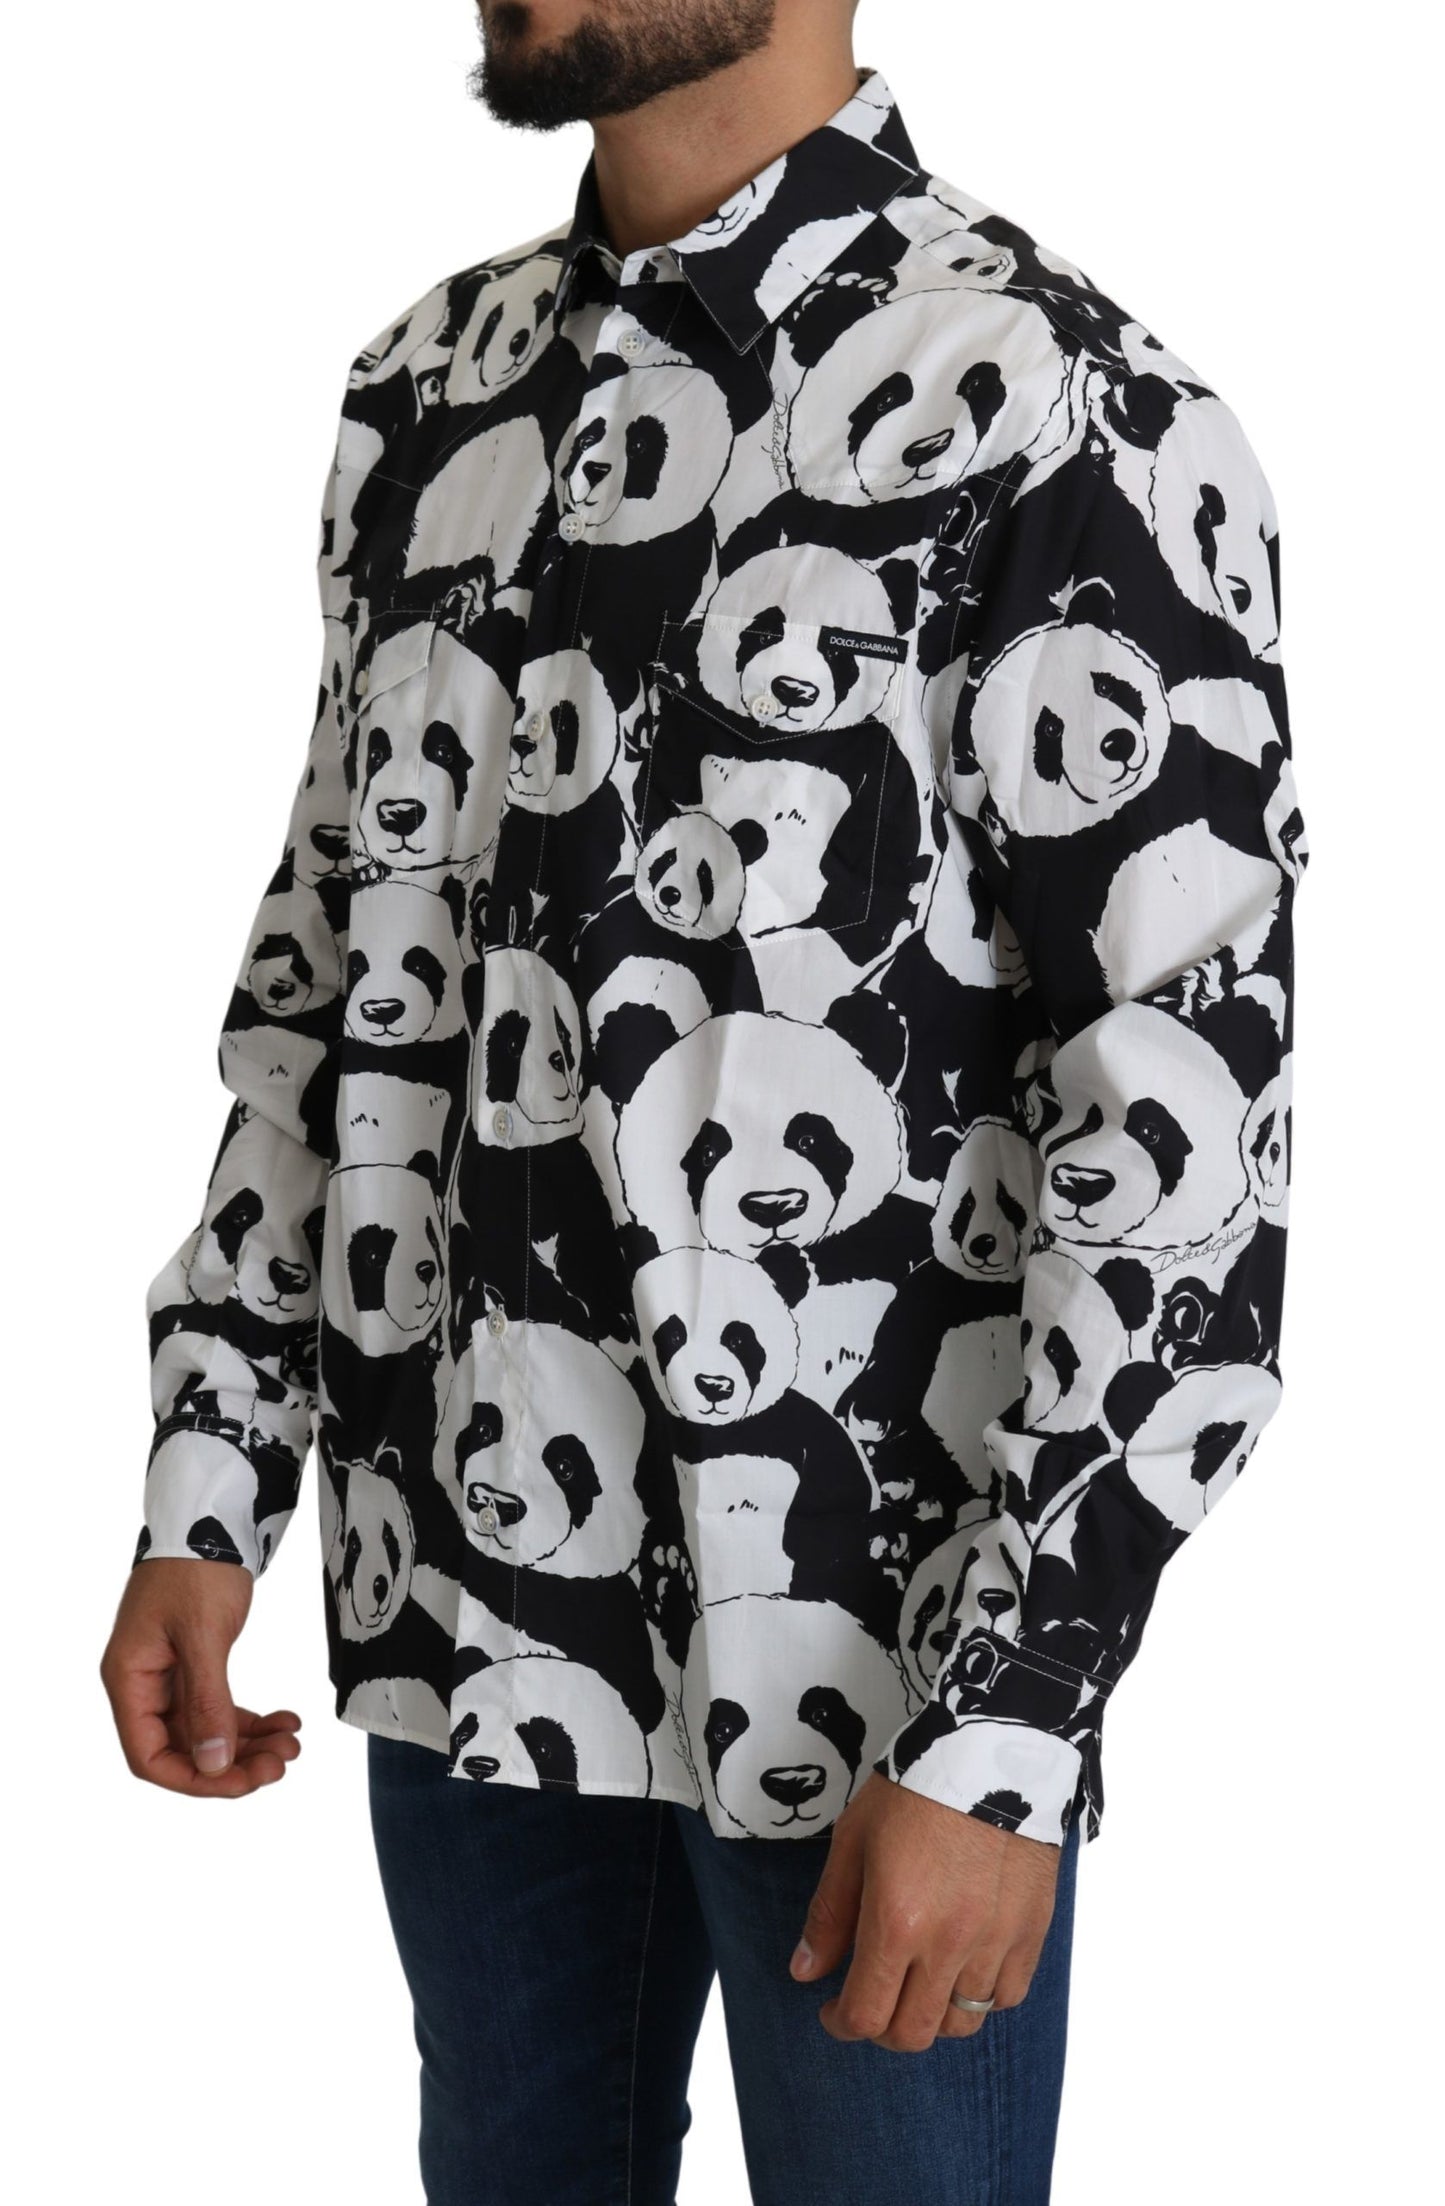 Panda Print Pure Cotton Shirt - Black White